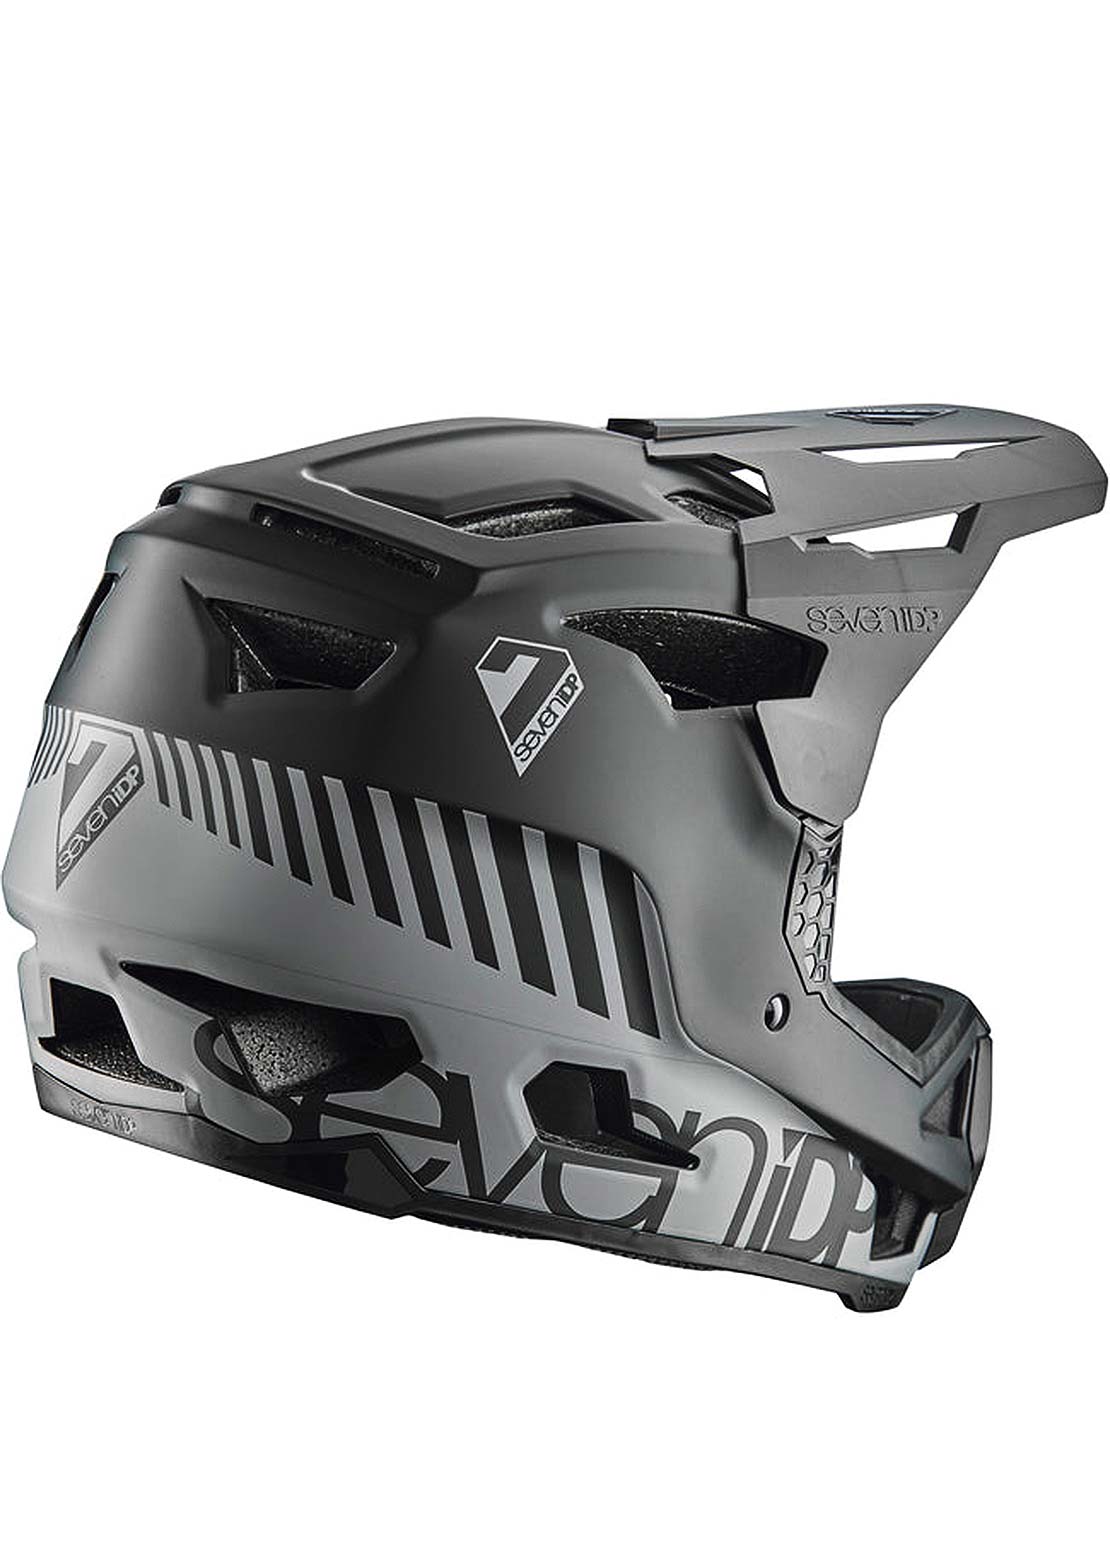 7iDP Project 23 Fiber Glass Downhill Helmet 59 - 60cm Graphite/Black